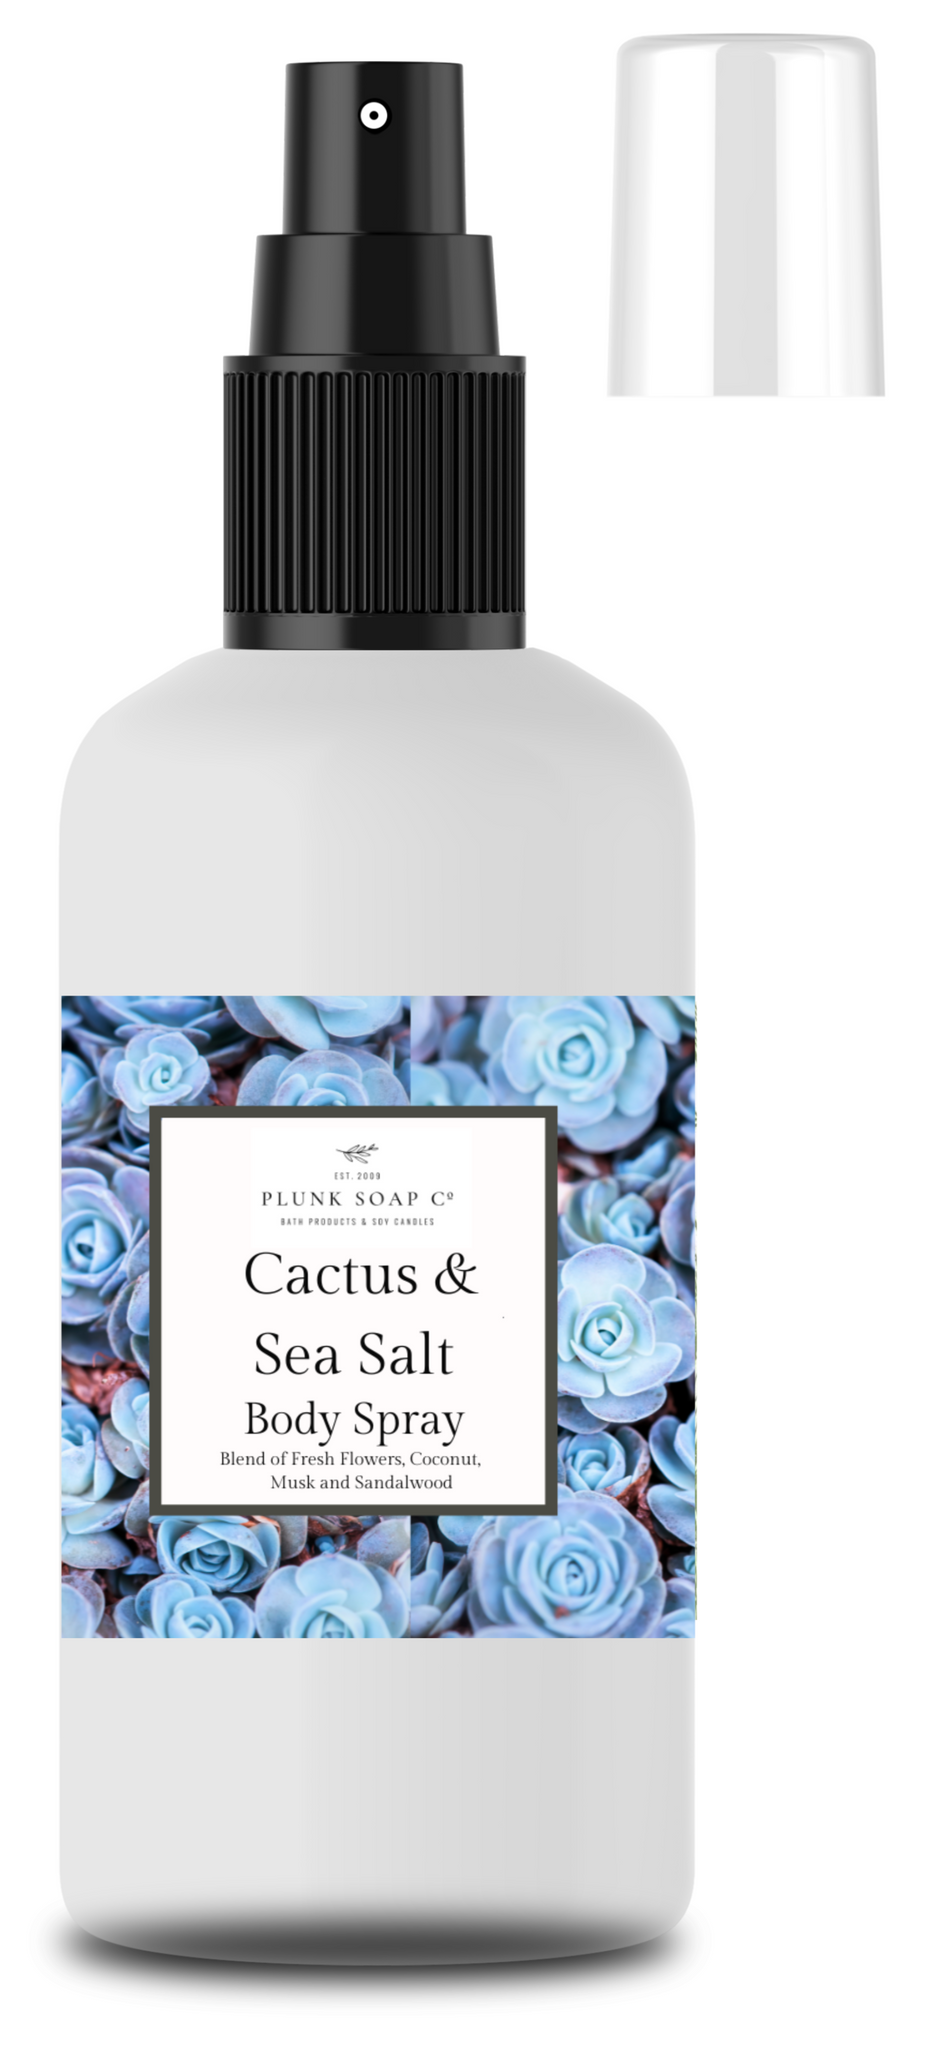 Cactus and Sea Salt scented body spray